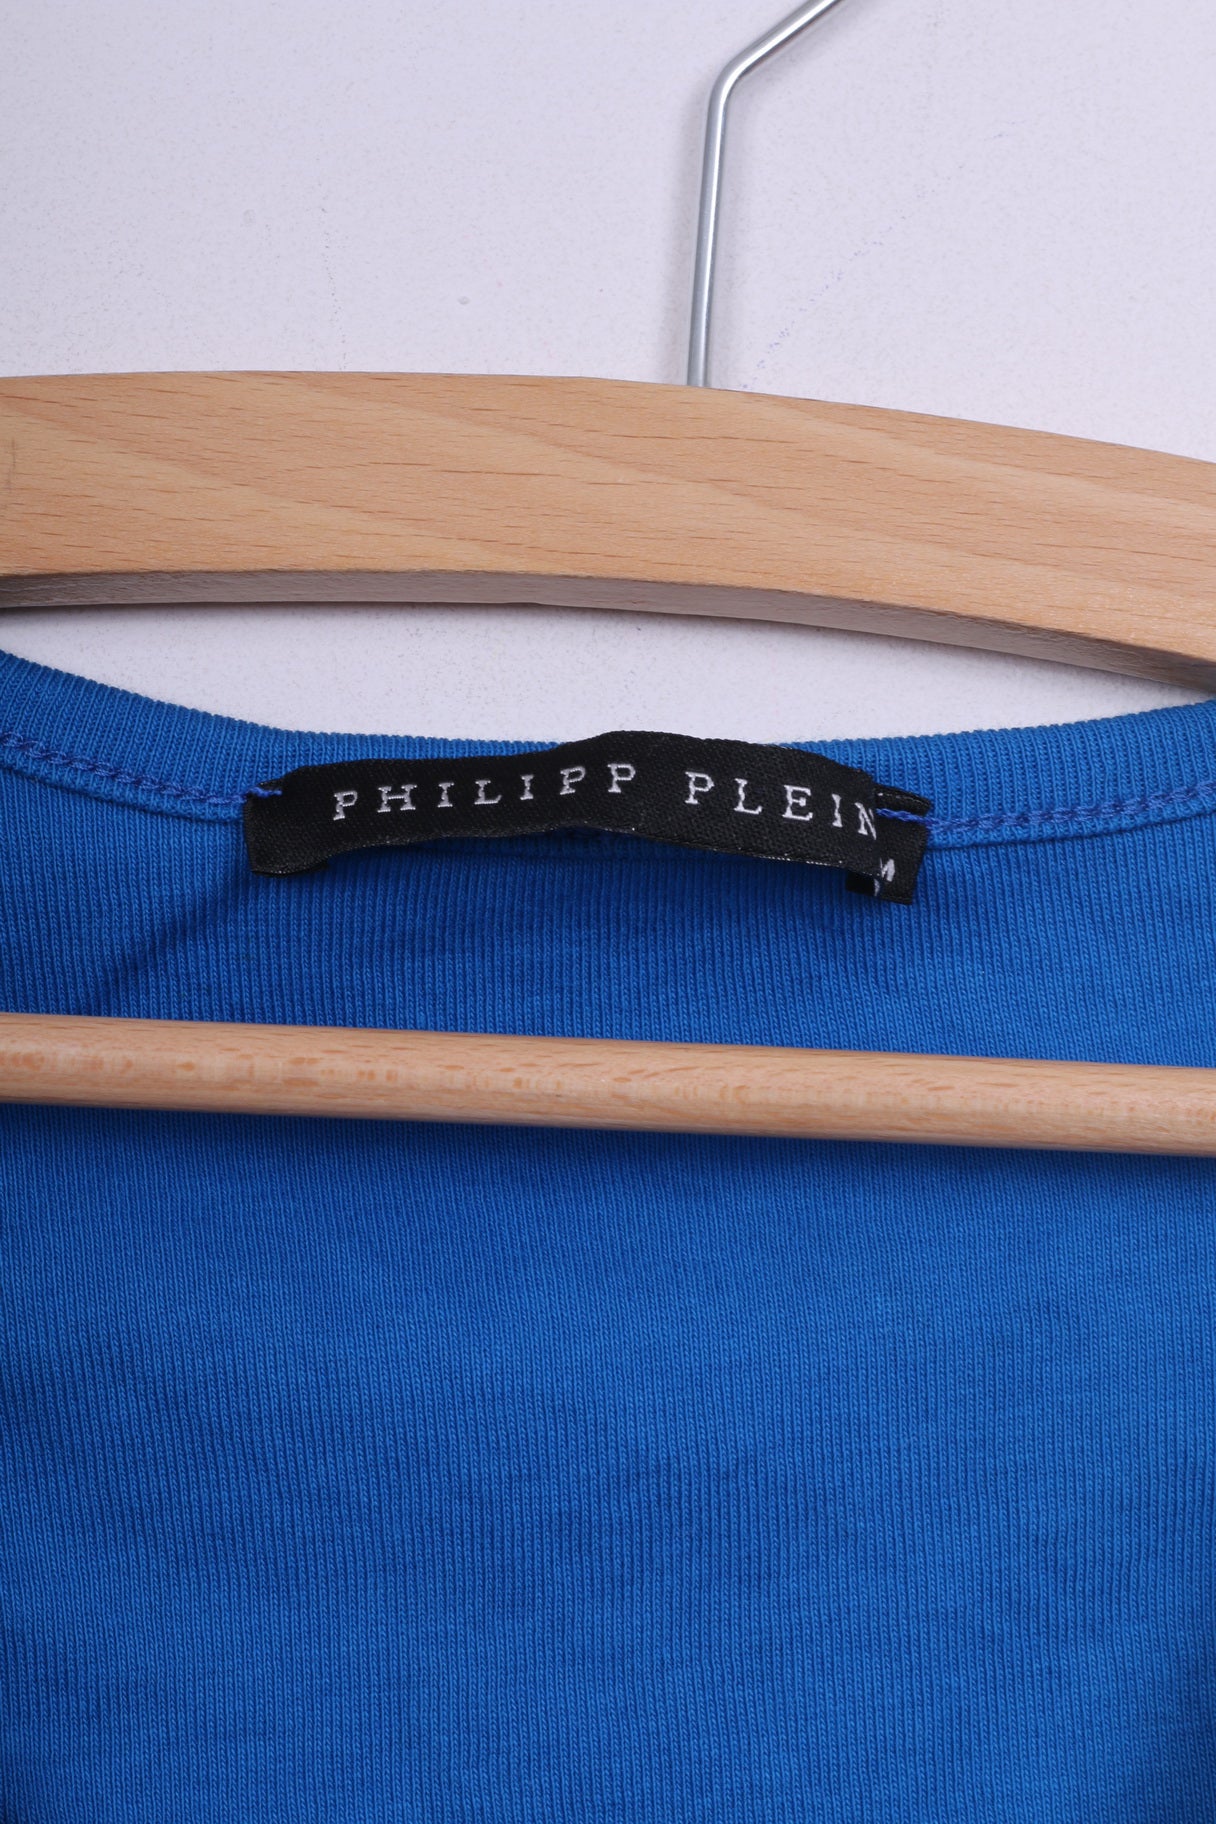 Philipp Plein Womens M Tank Top Shirt Blue Graphic Skull Summer Sleeveless Cotton